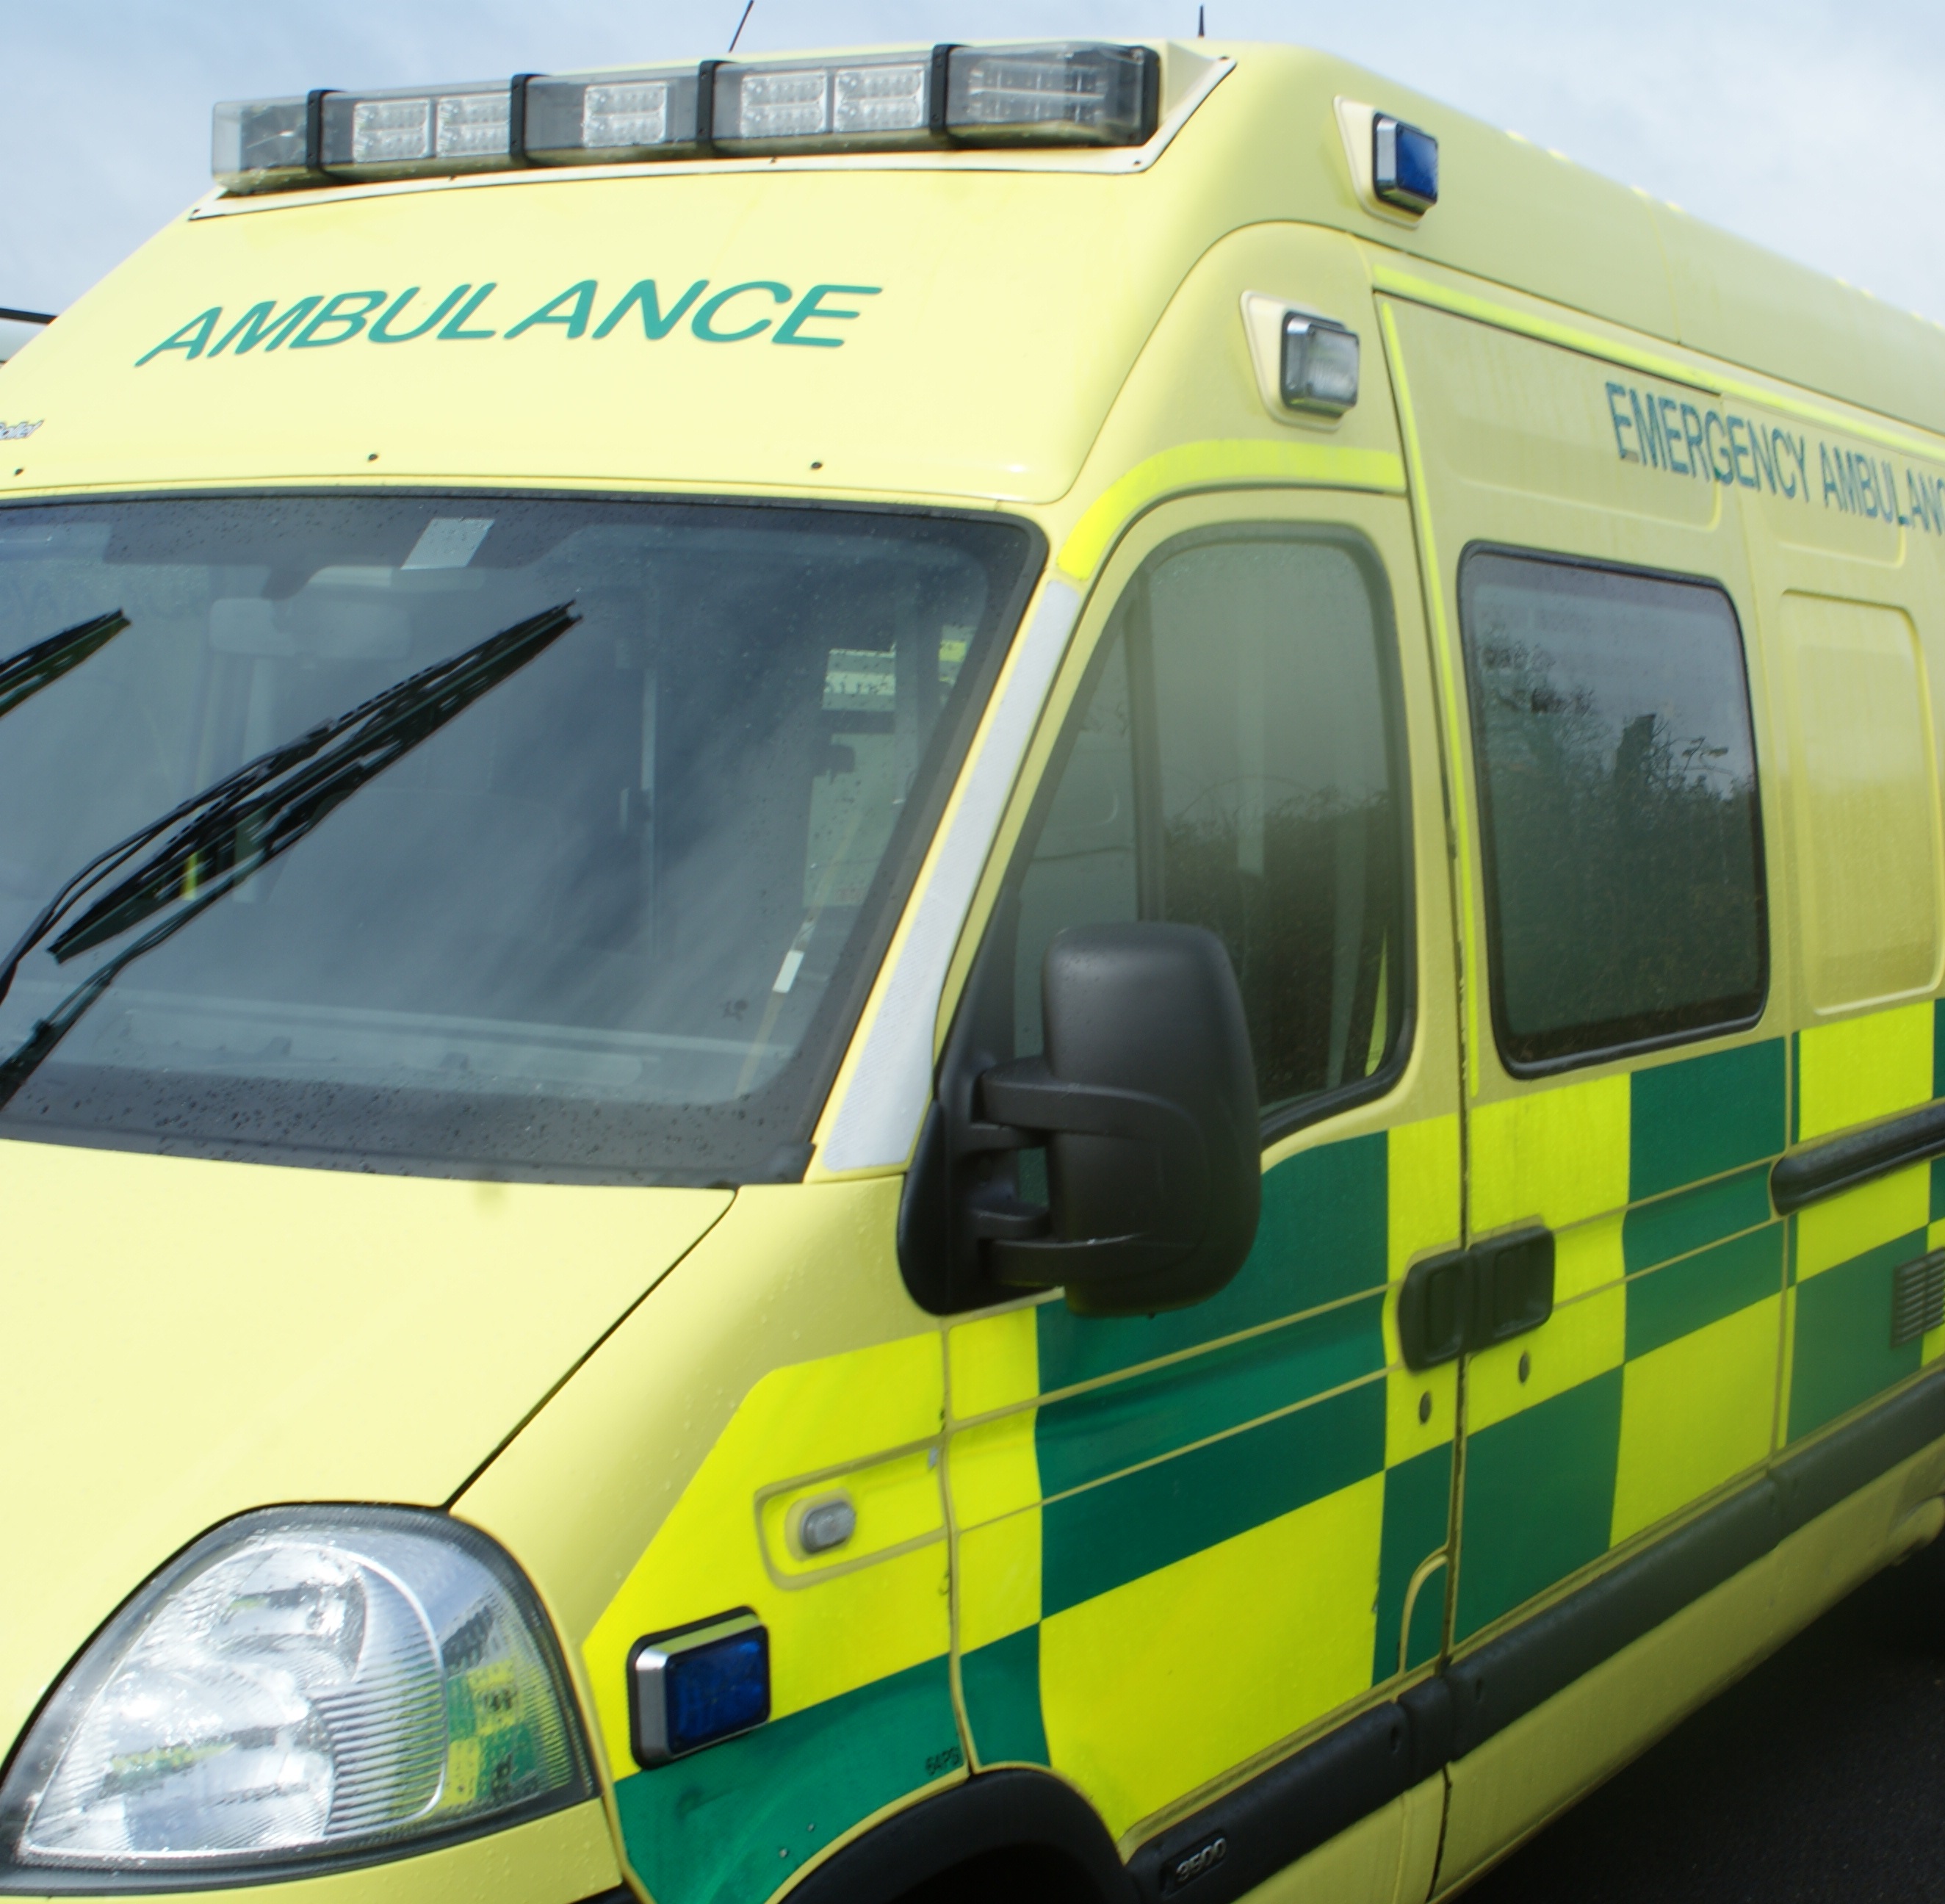 Ambulance Response Services